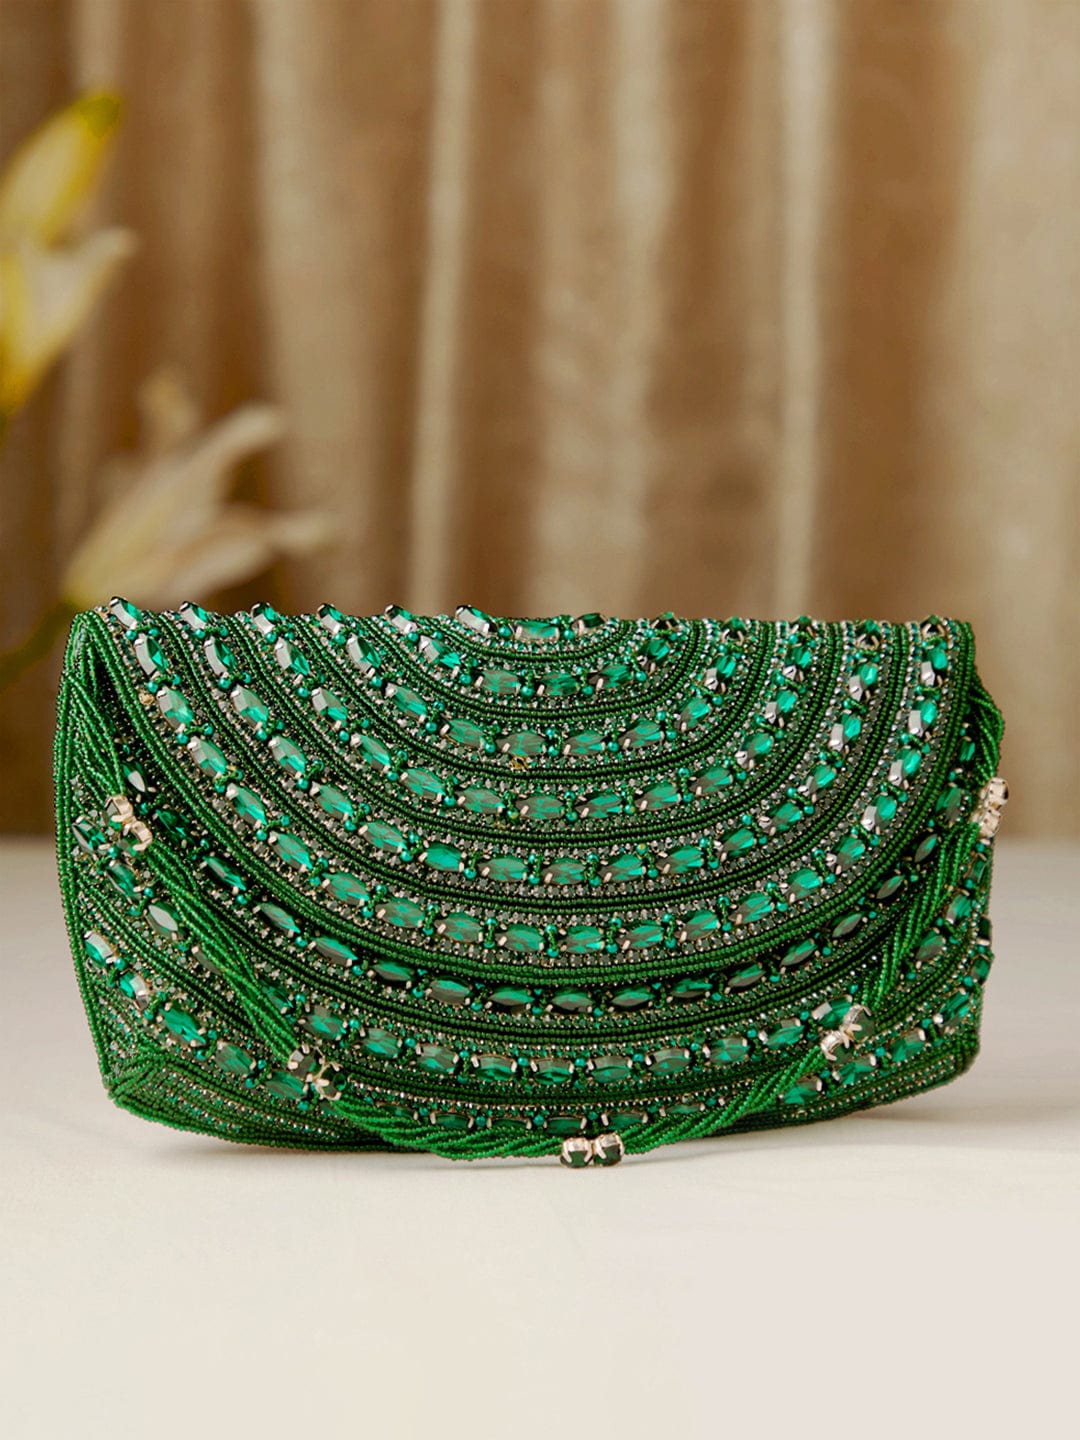 Ladies purse Epsom with zipper, Viper Green